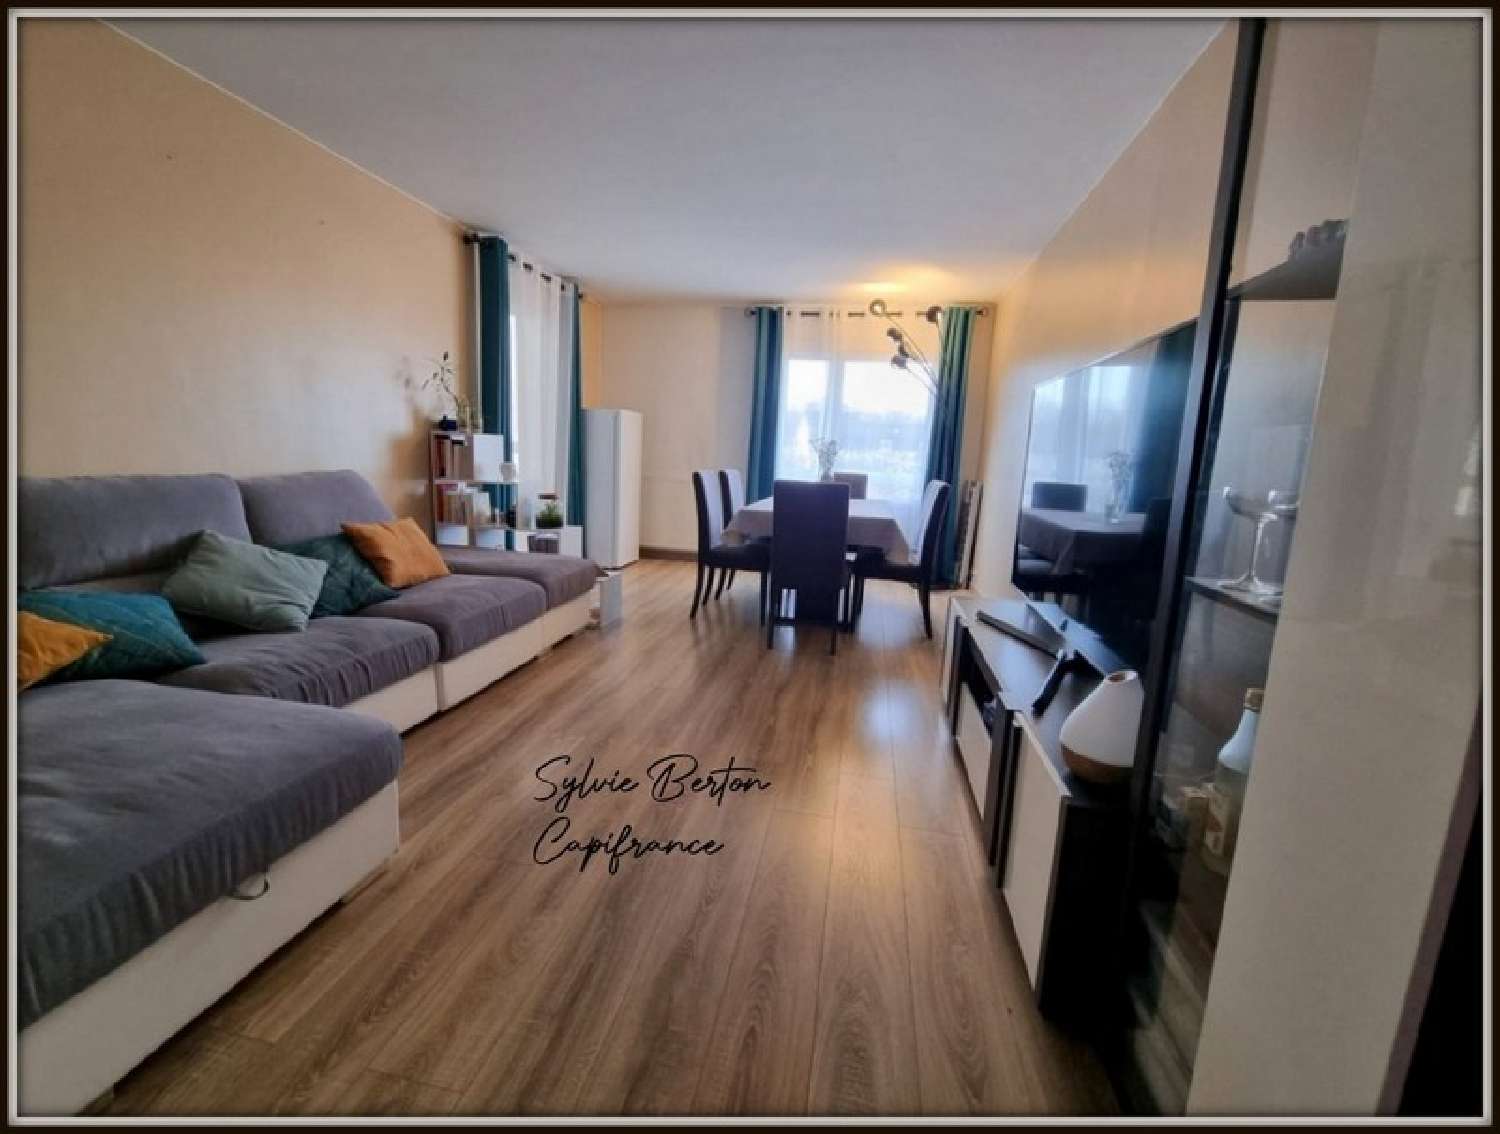  for sale apartment Sevran Seine-Saint-Denis 2